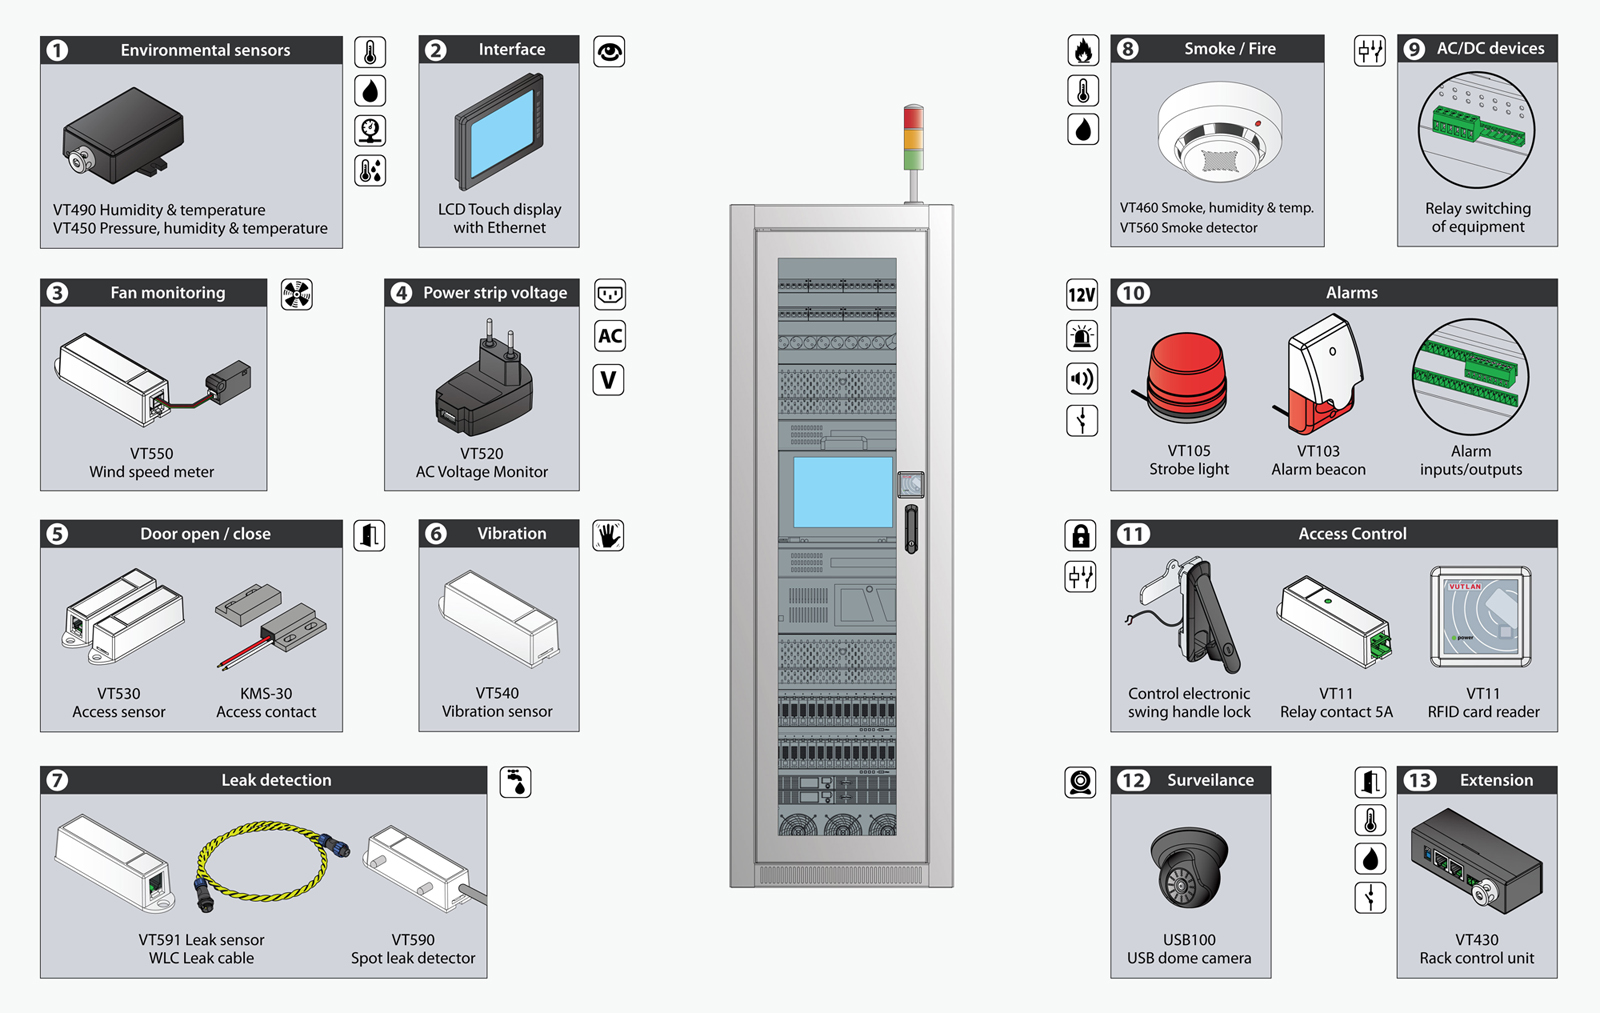 interSeptor Server Room Monitoring, Computer room monitoring, alerts &  alarms, Computer heat monitors